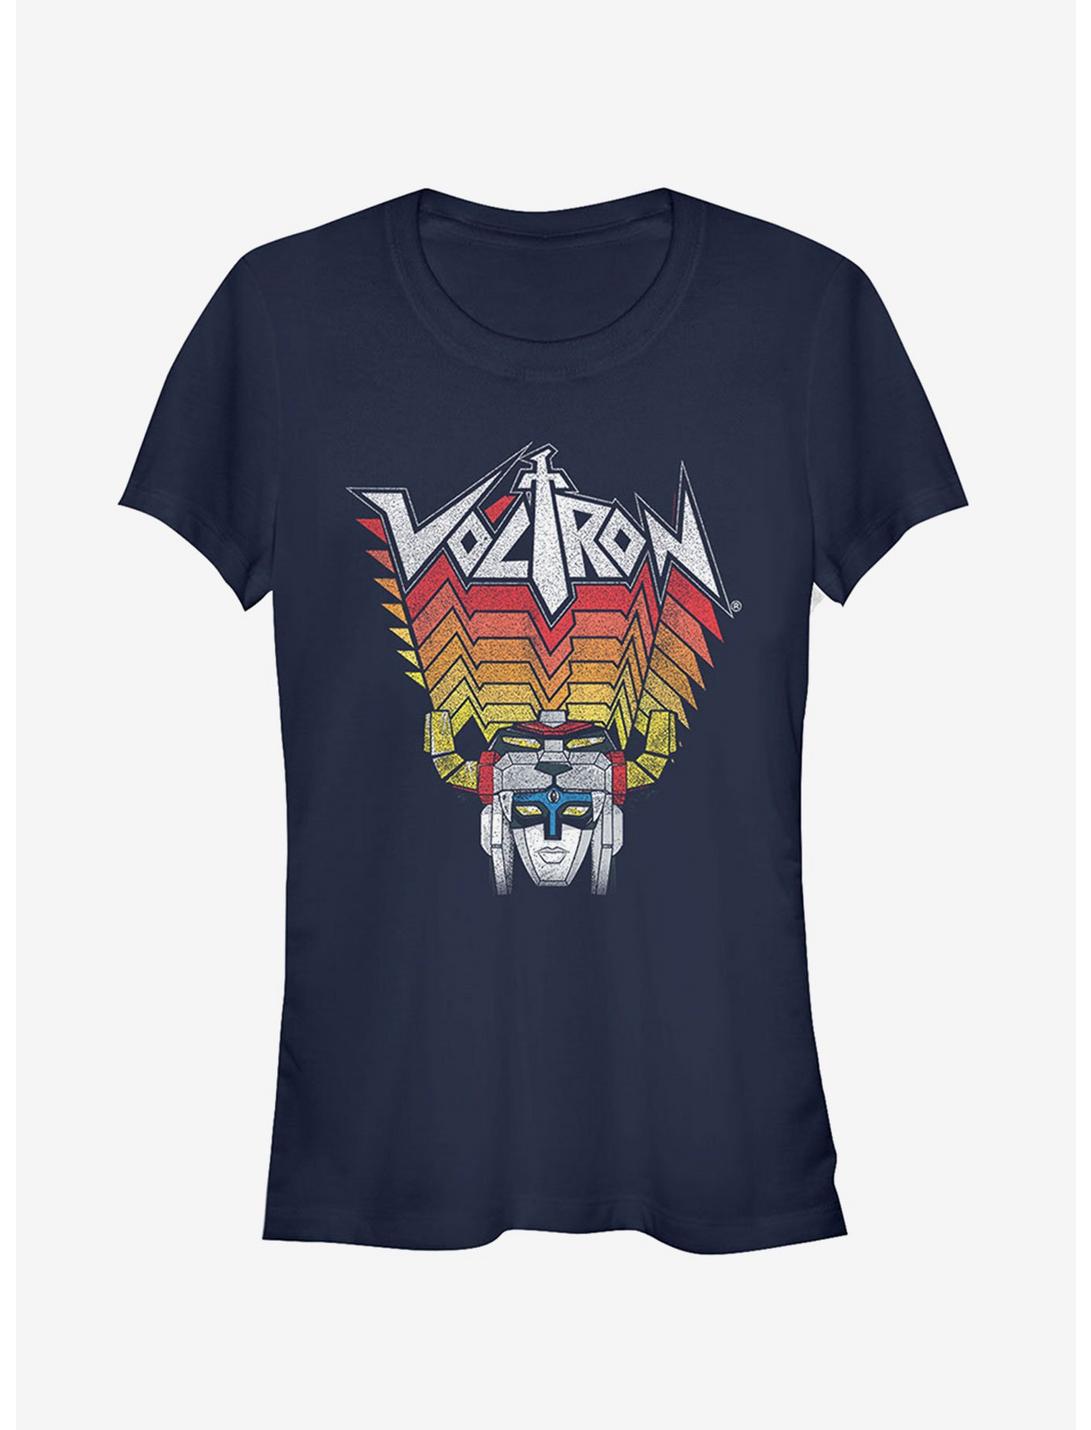 Voltron Robot Stripes Girls T-Shirt, NAVY, hi-res